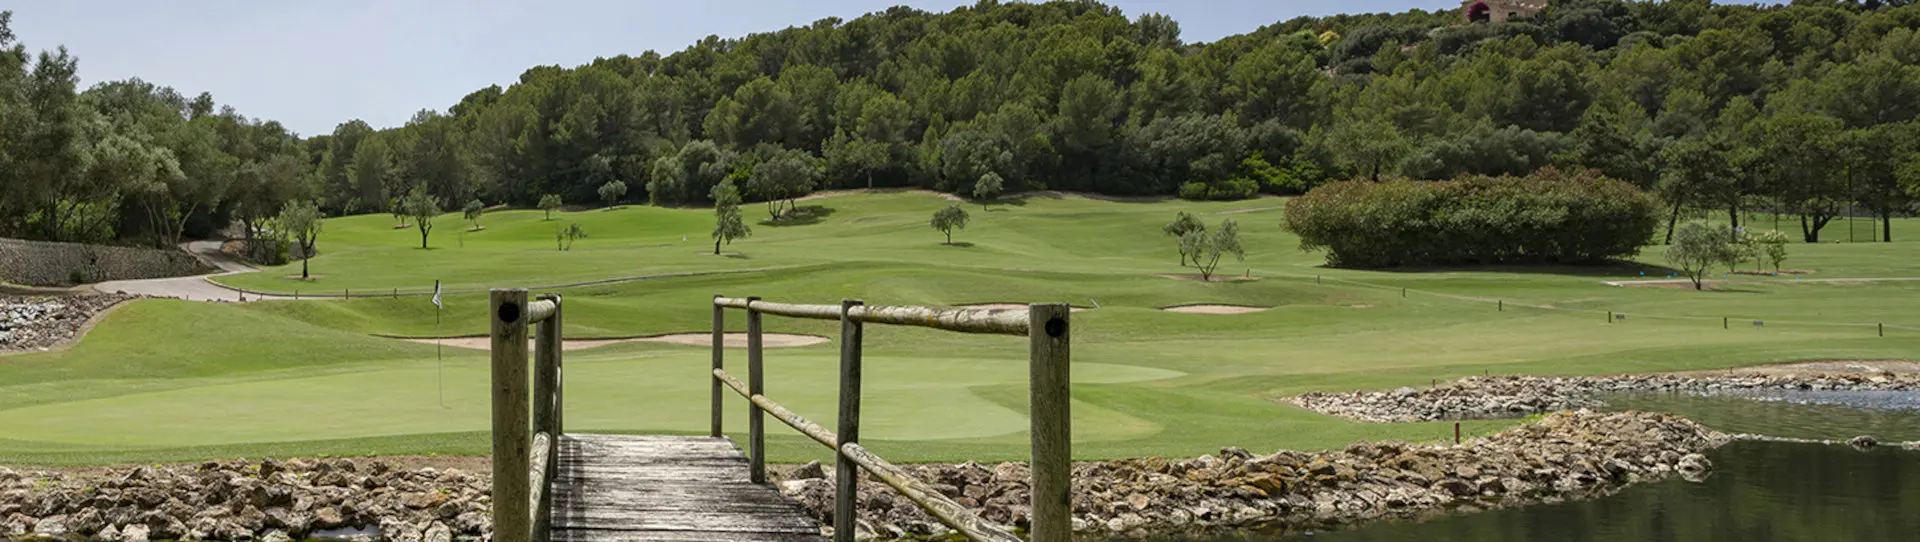 Spain golf holidays - Arabella Golf Mallorca Duo SMG+SVG - Photo 1